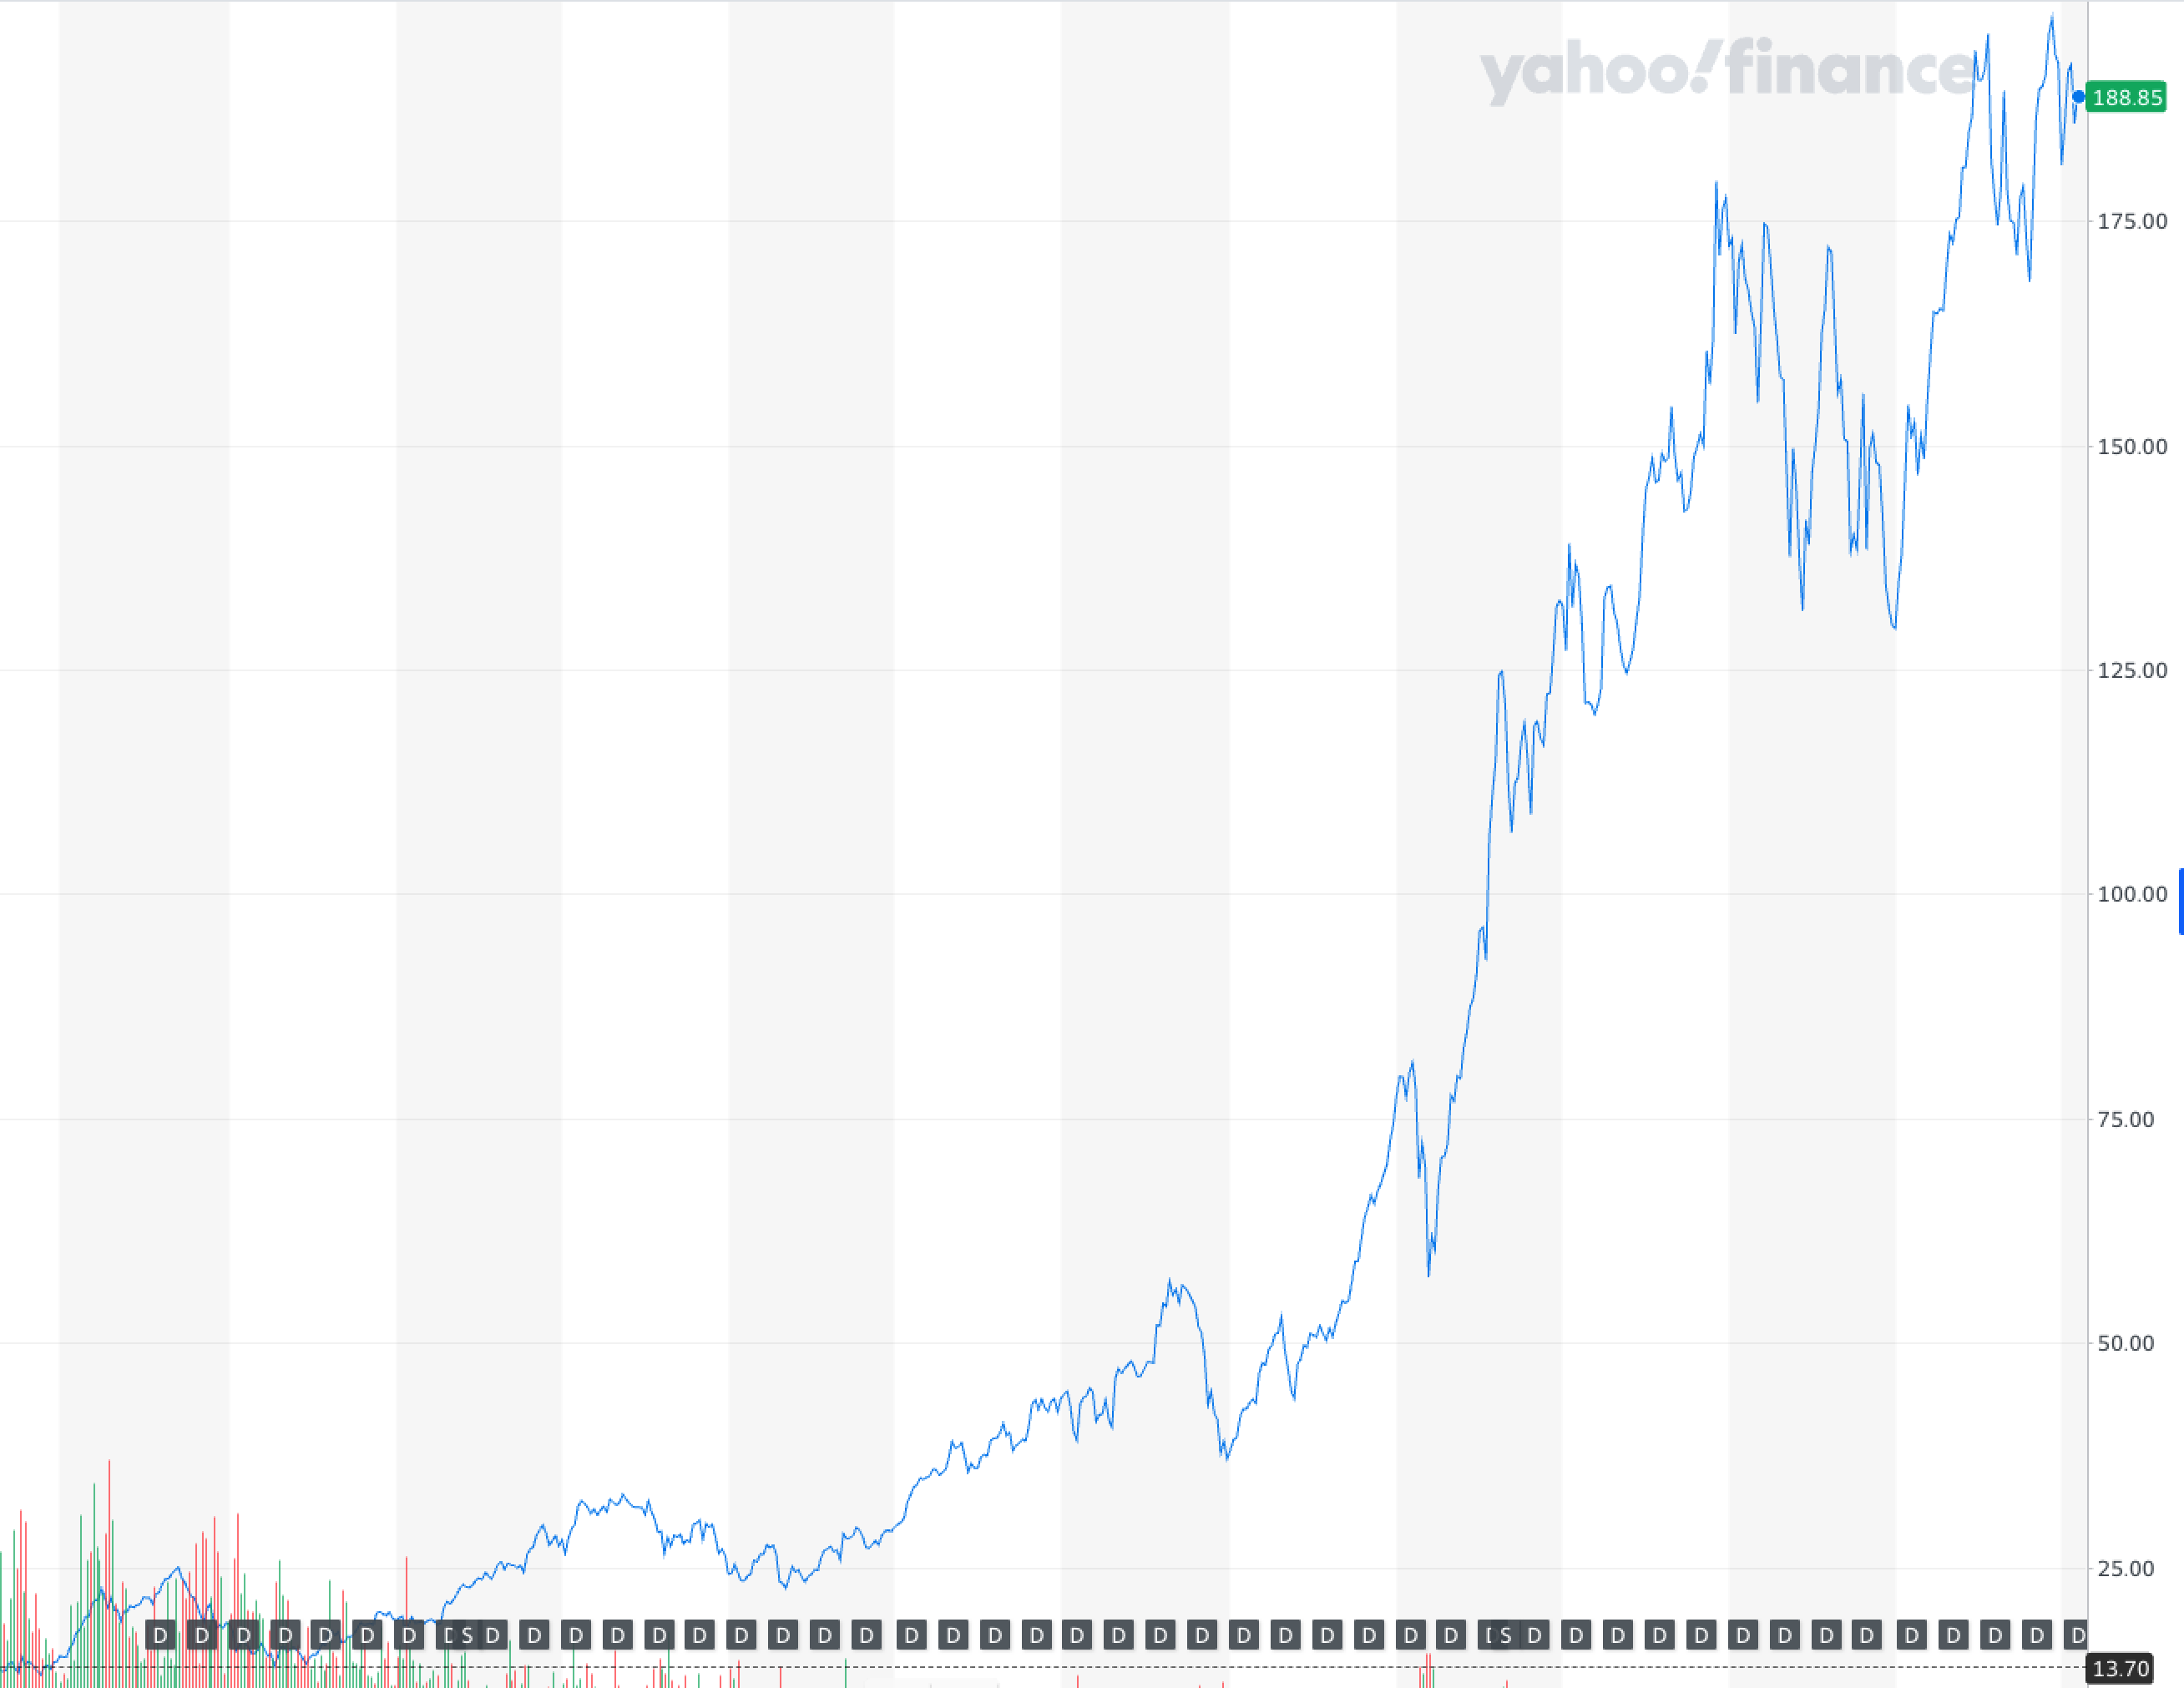 Apple Stock Price (Source: Yahoo Finance)